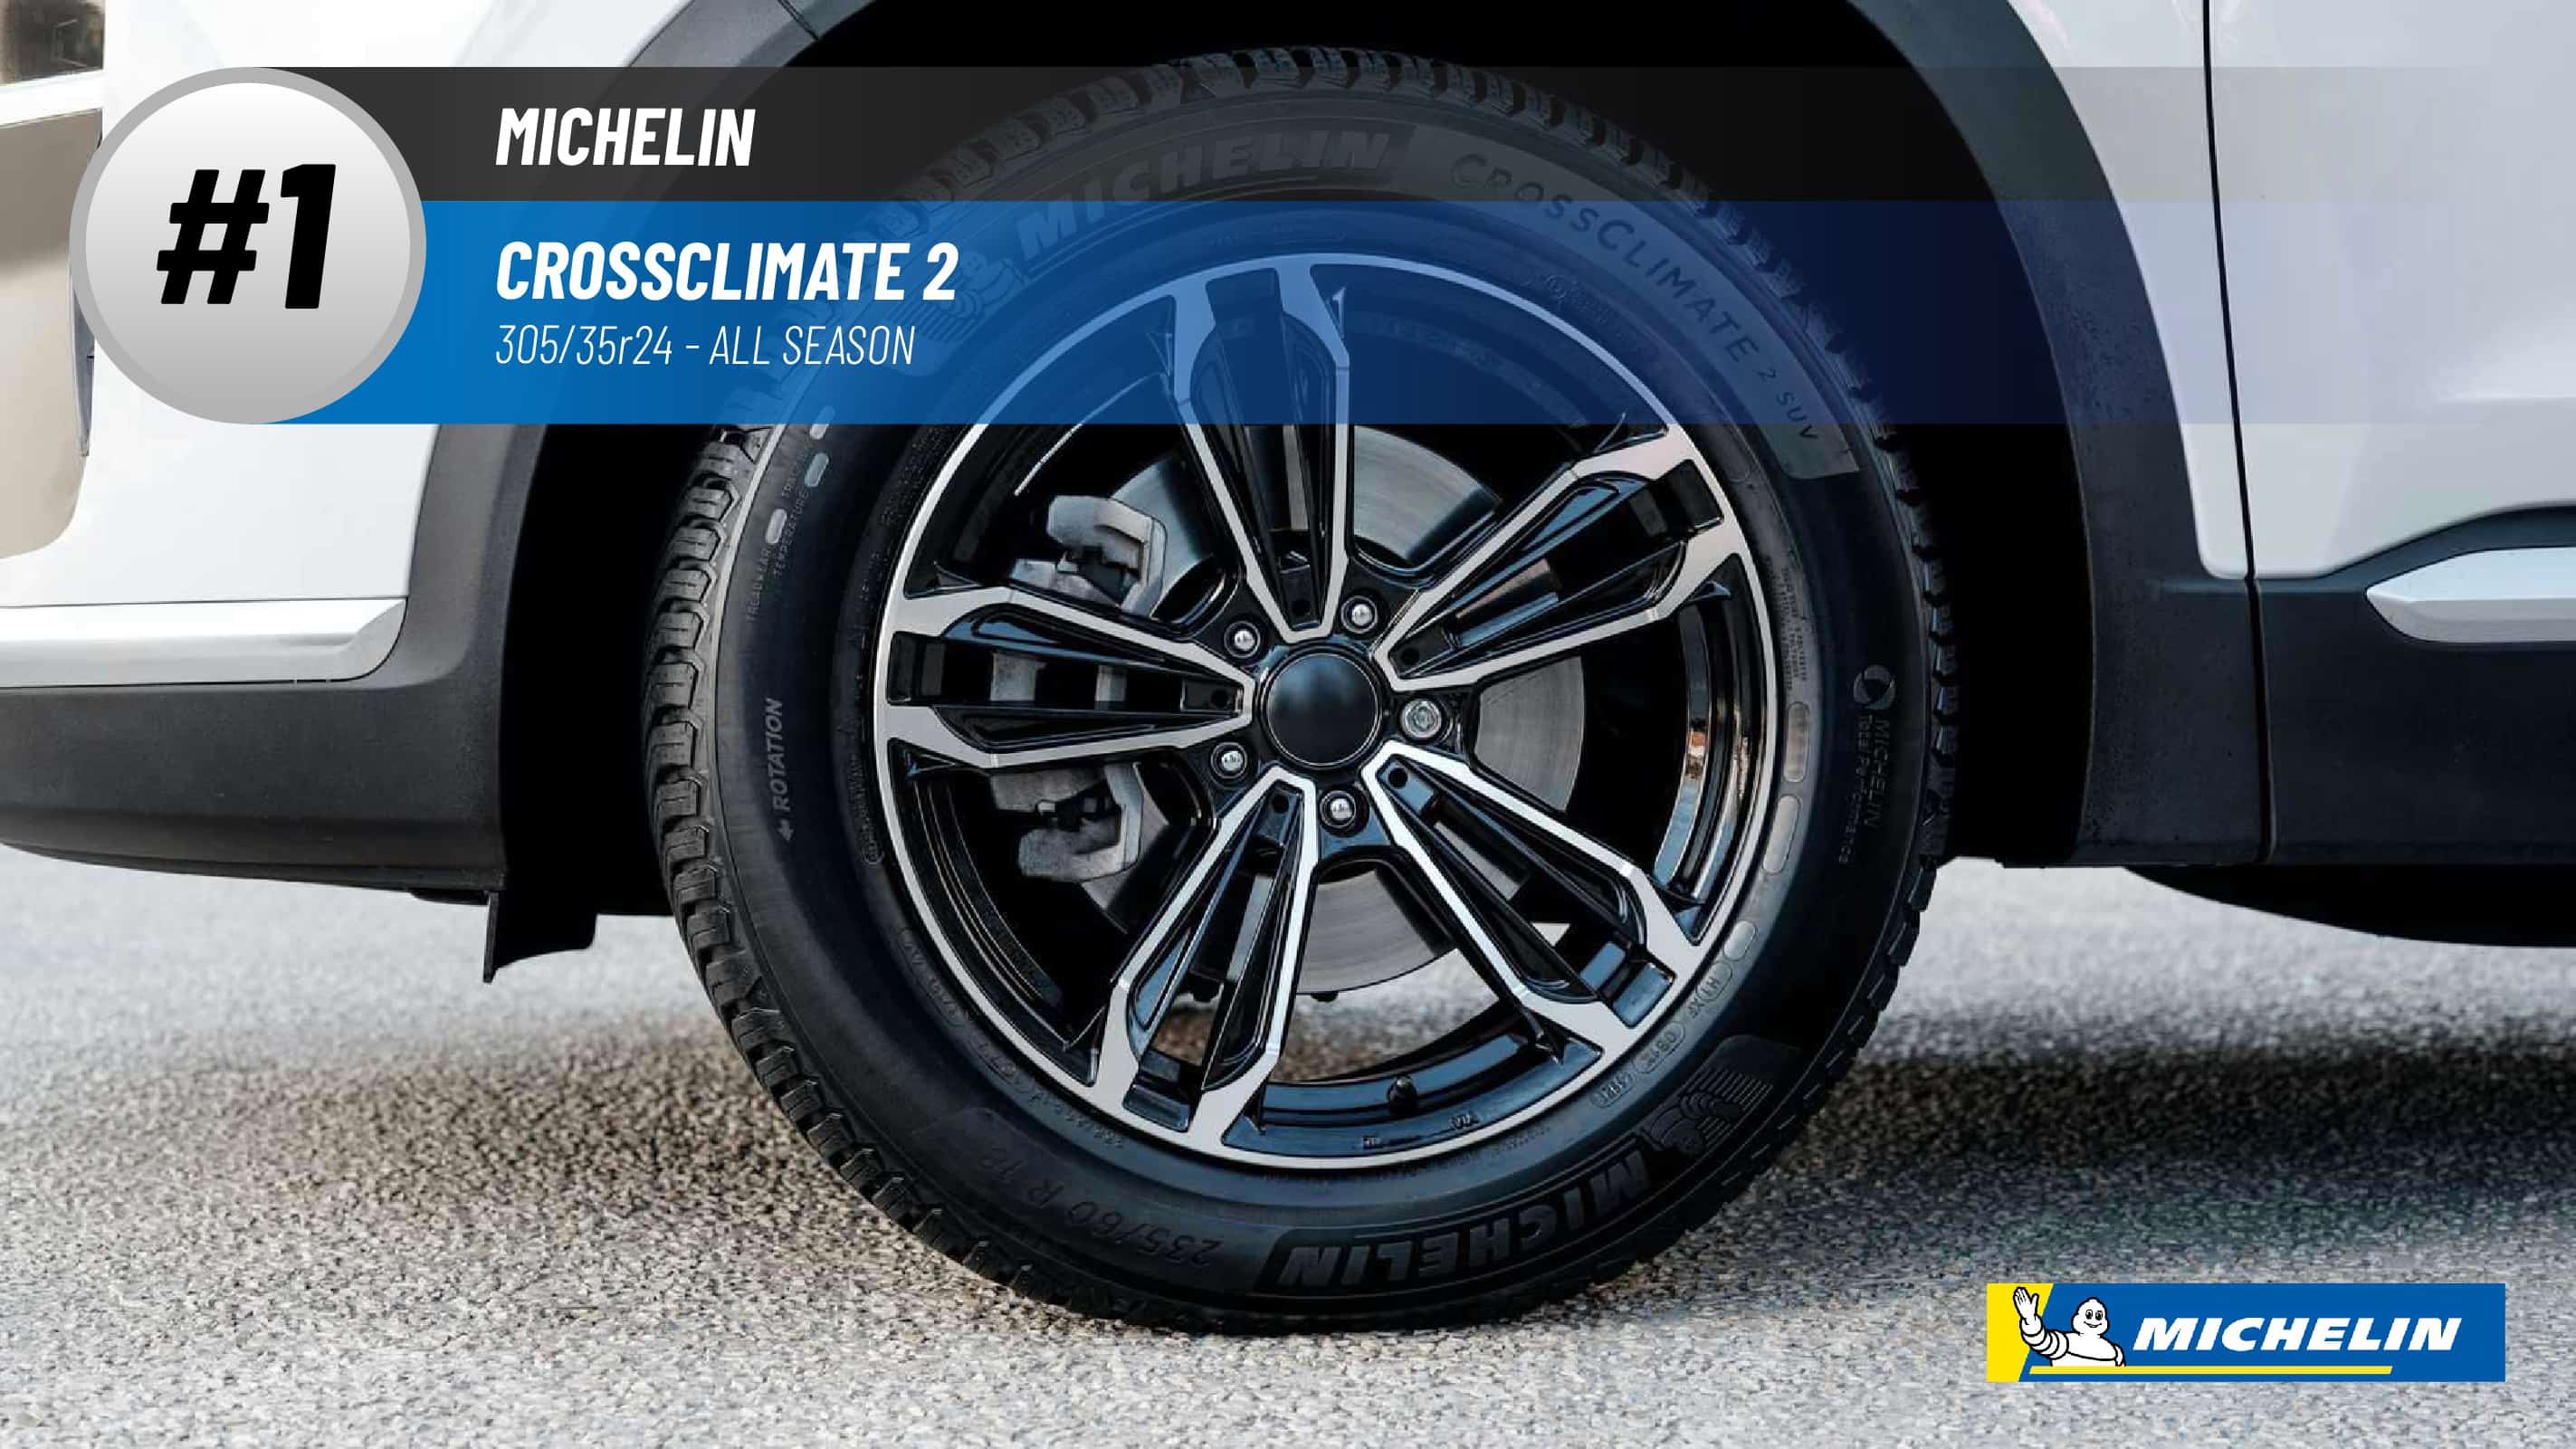 Top #1 All Season Tires: Michelin Crossclimate 2 – 305/35R24